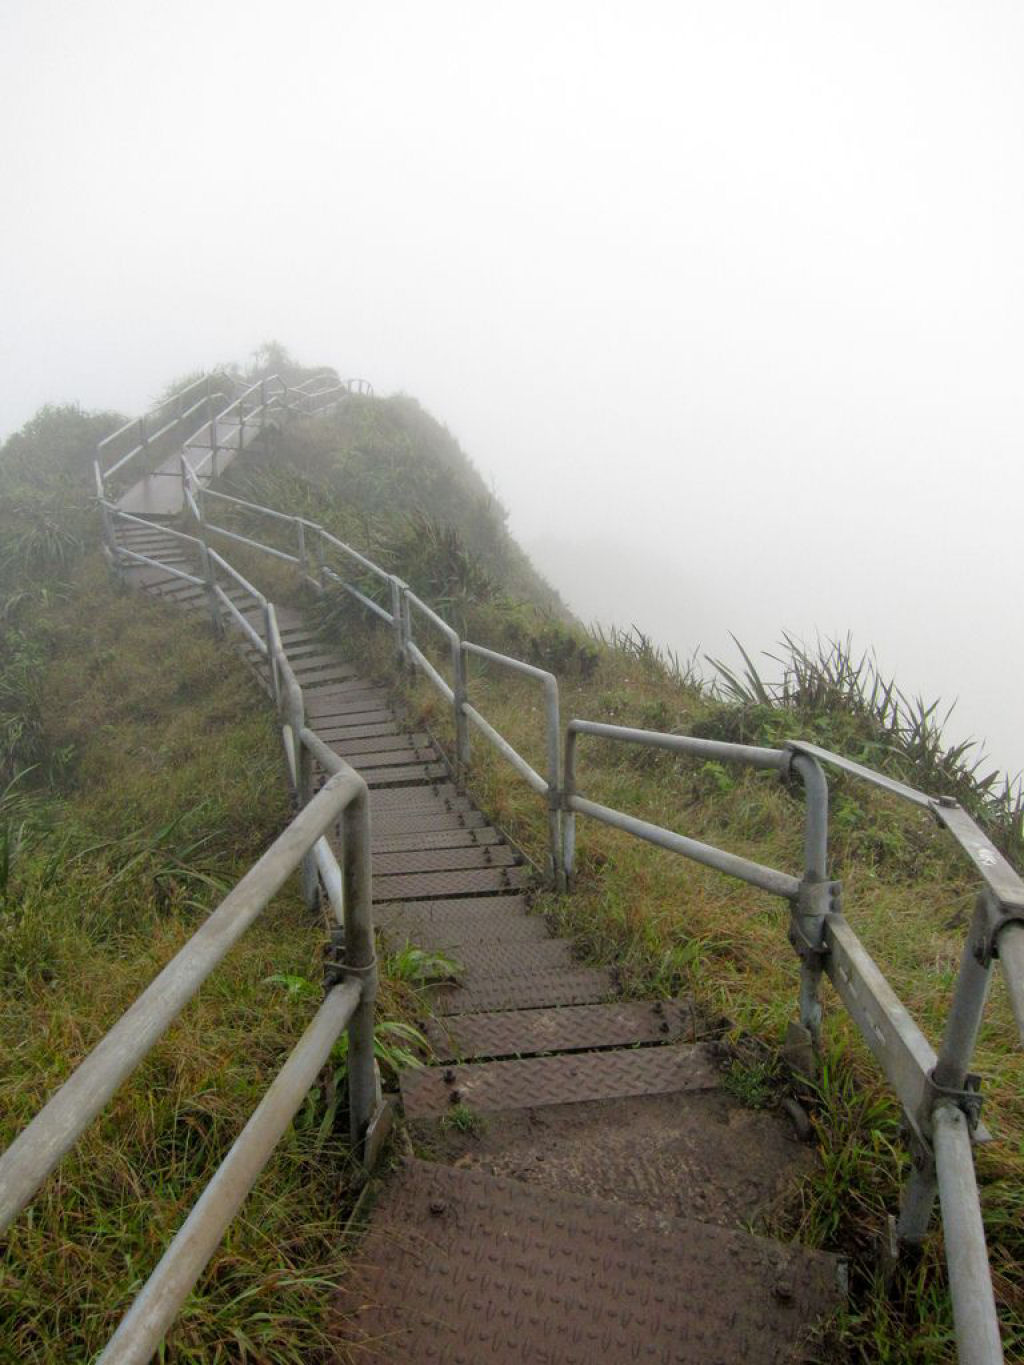 Stairway to Heaven: as incrveis escadarias Haiku do Hava